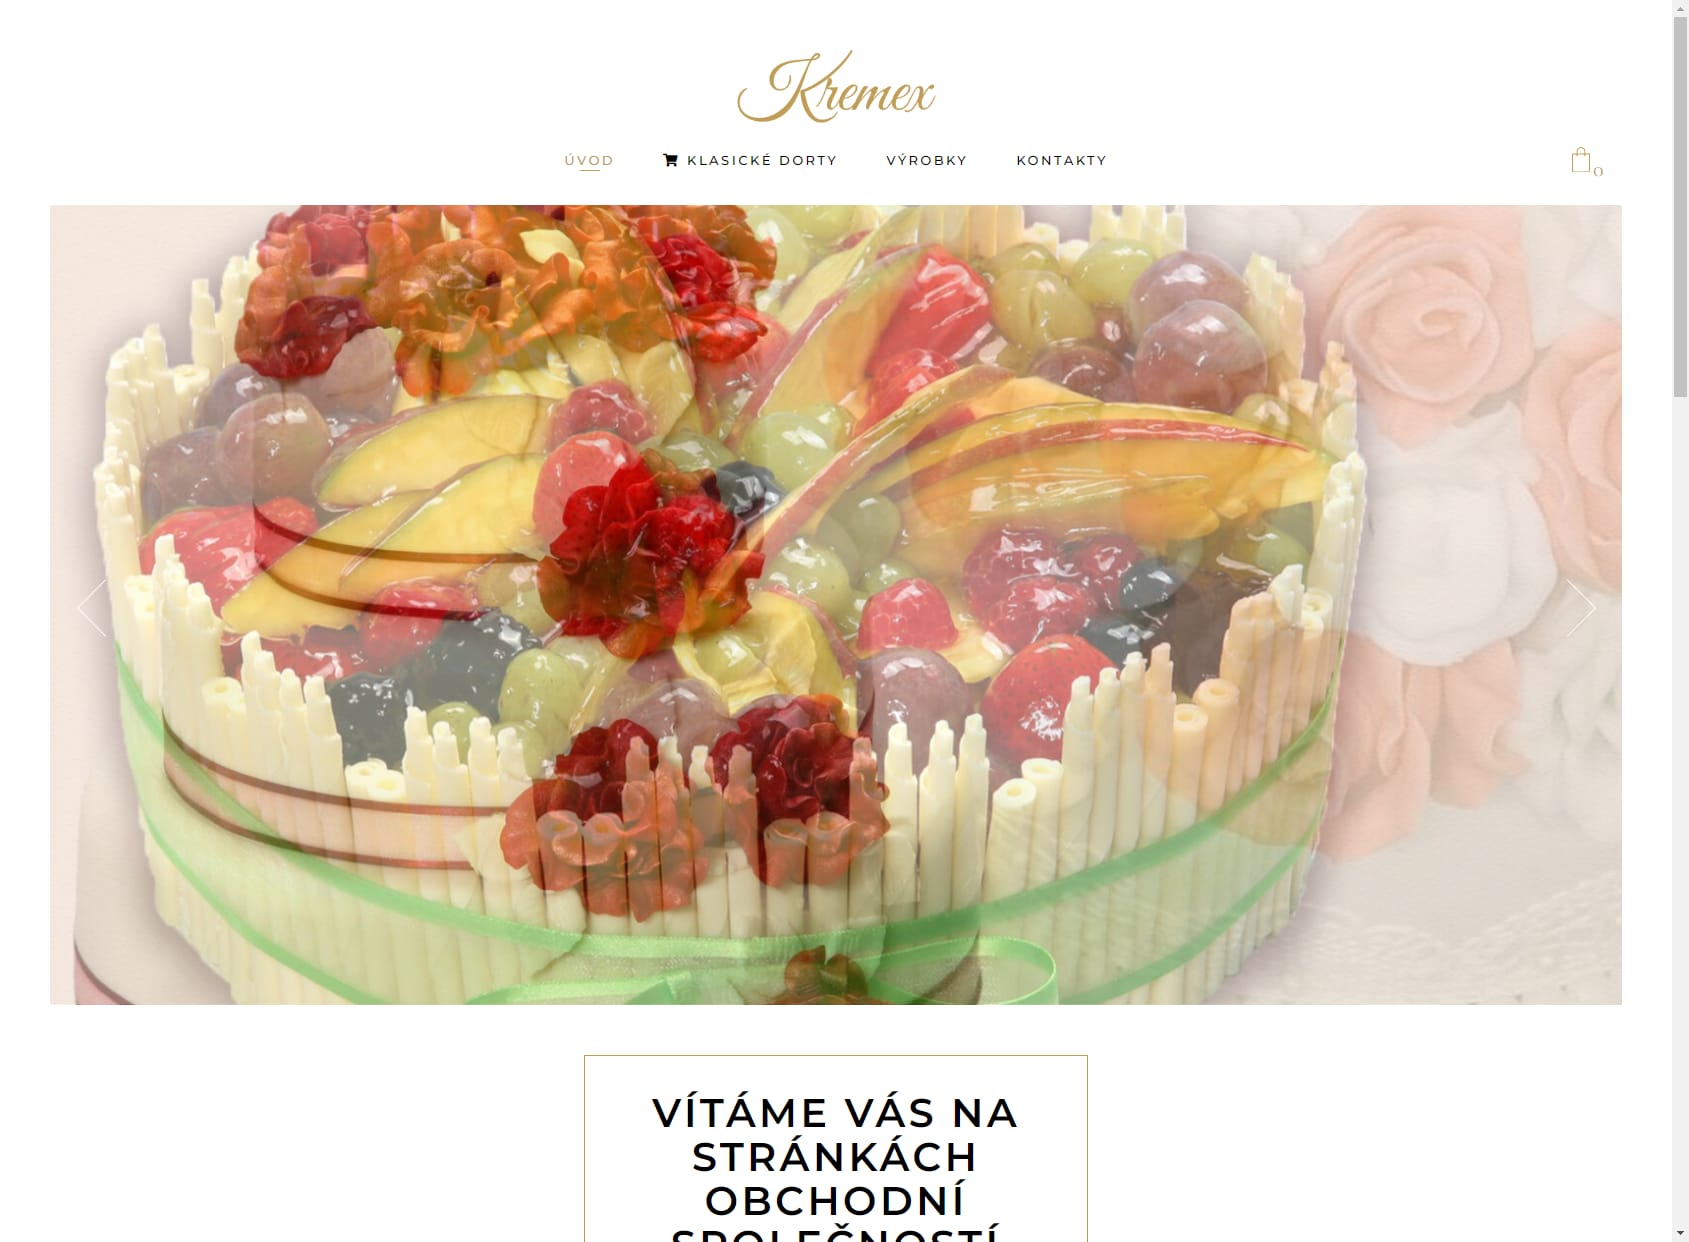 KREMEX Plus Ltd. - Cakes, confectionery